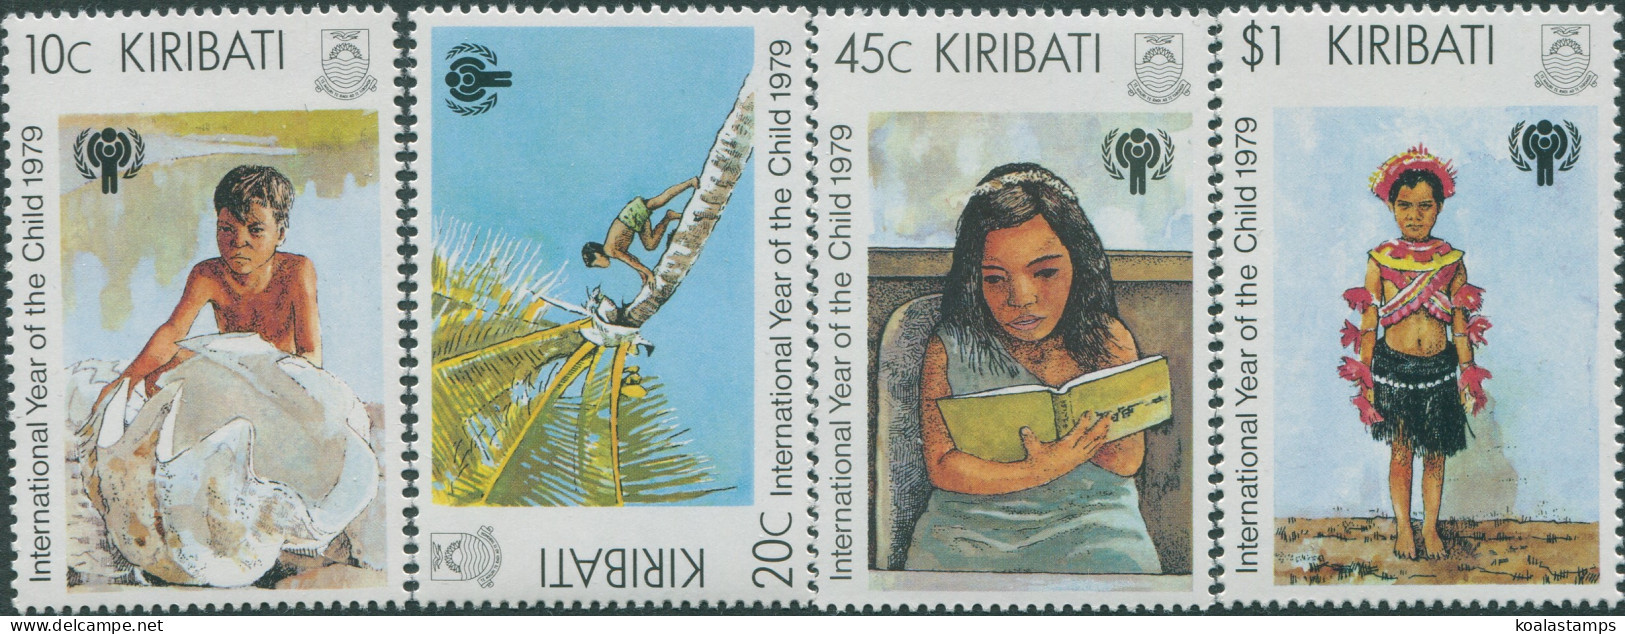 Kiribati 1979 SG105-108 IYC Set MNH - Kiribati (1979-...)